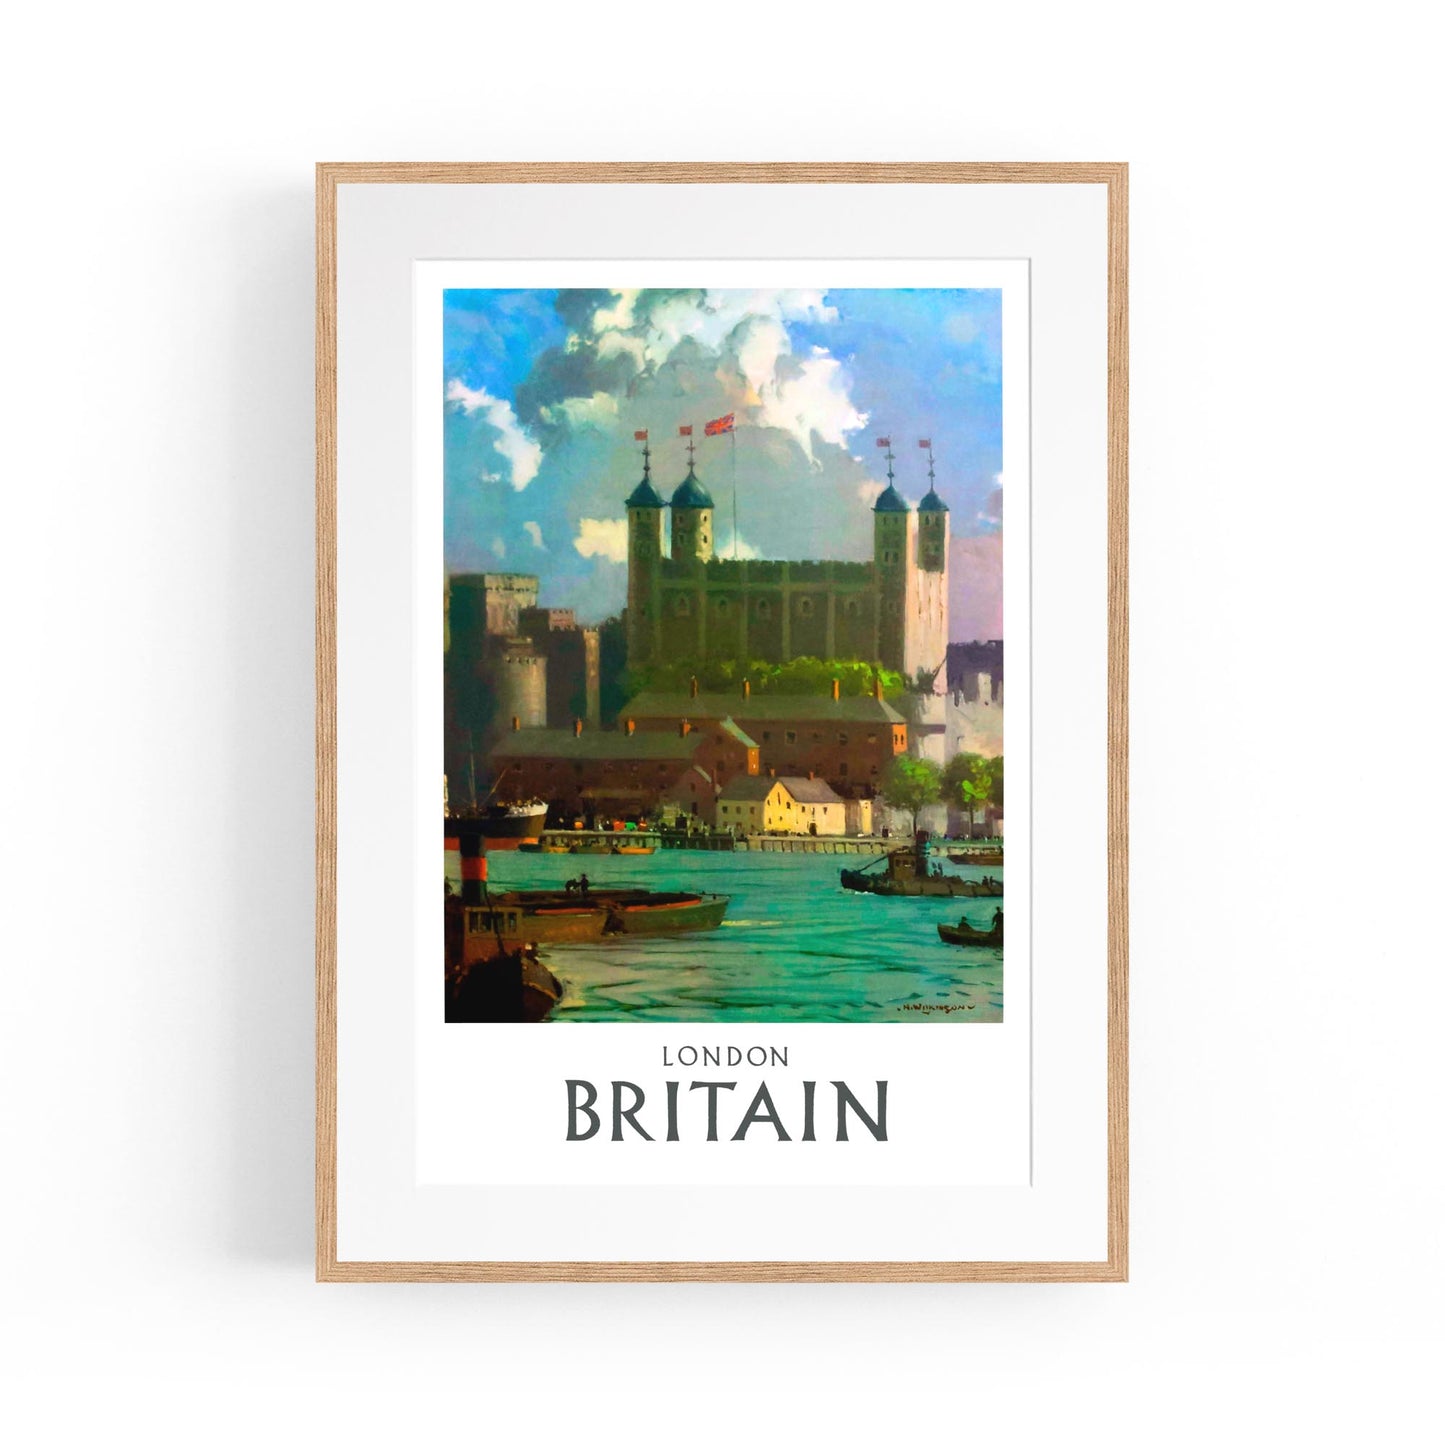 Tower of London, Britain | Framed Vintage Travel Poster